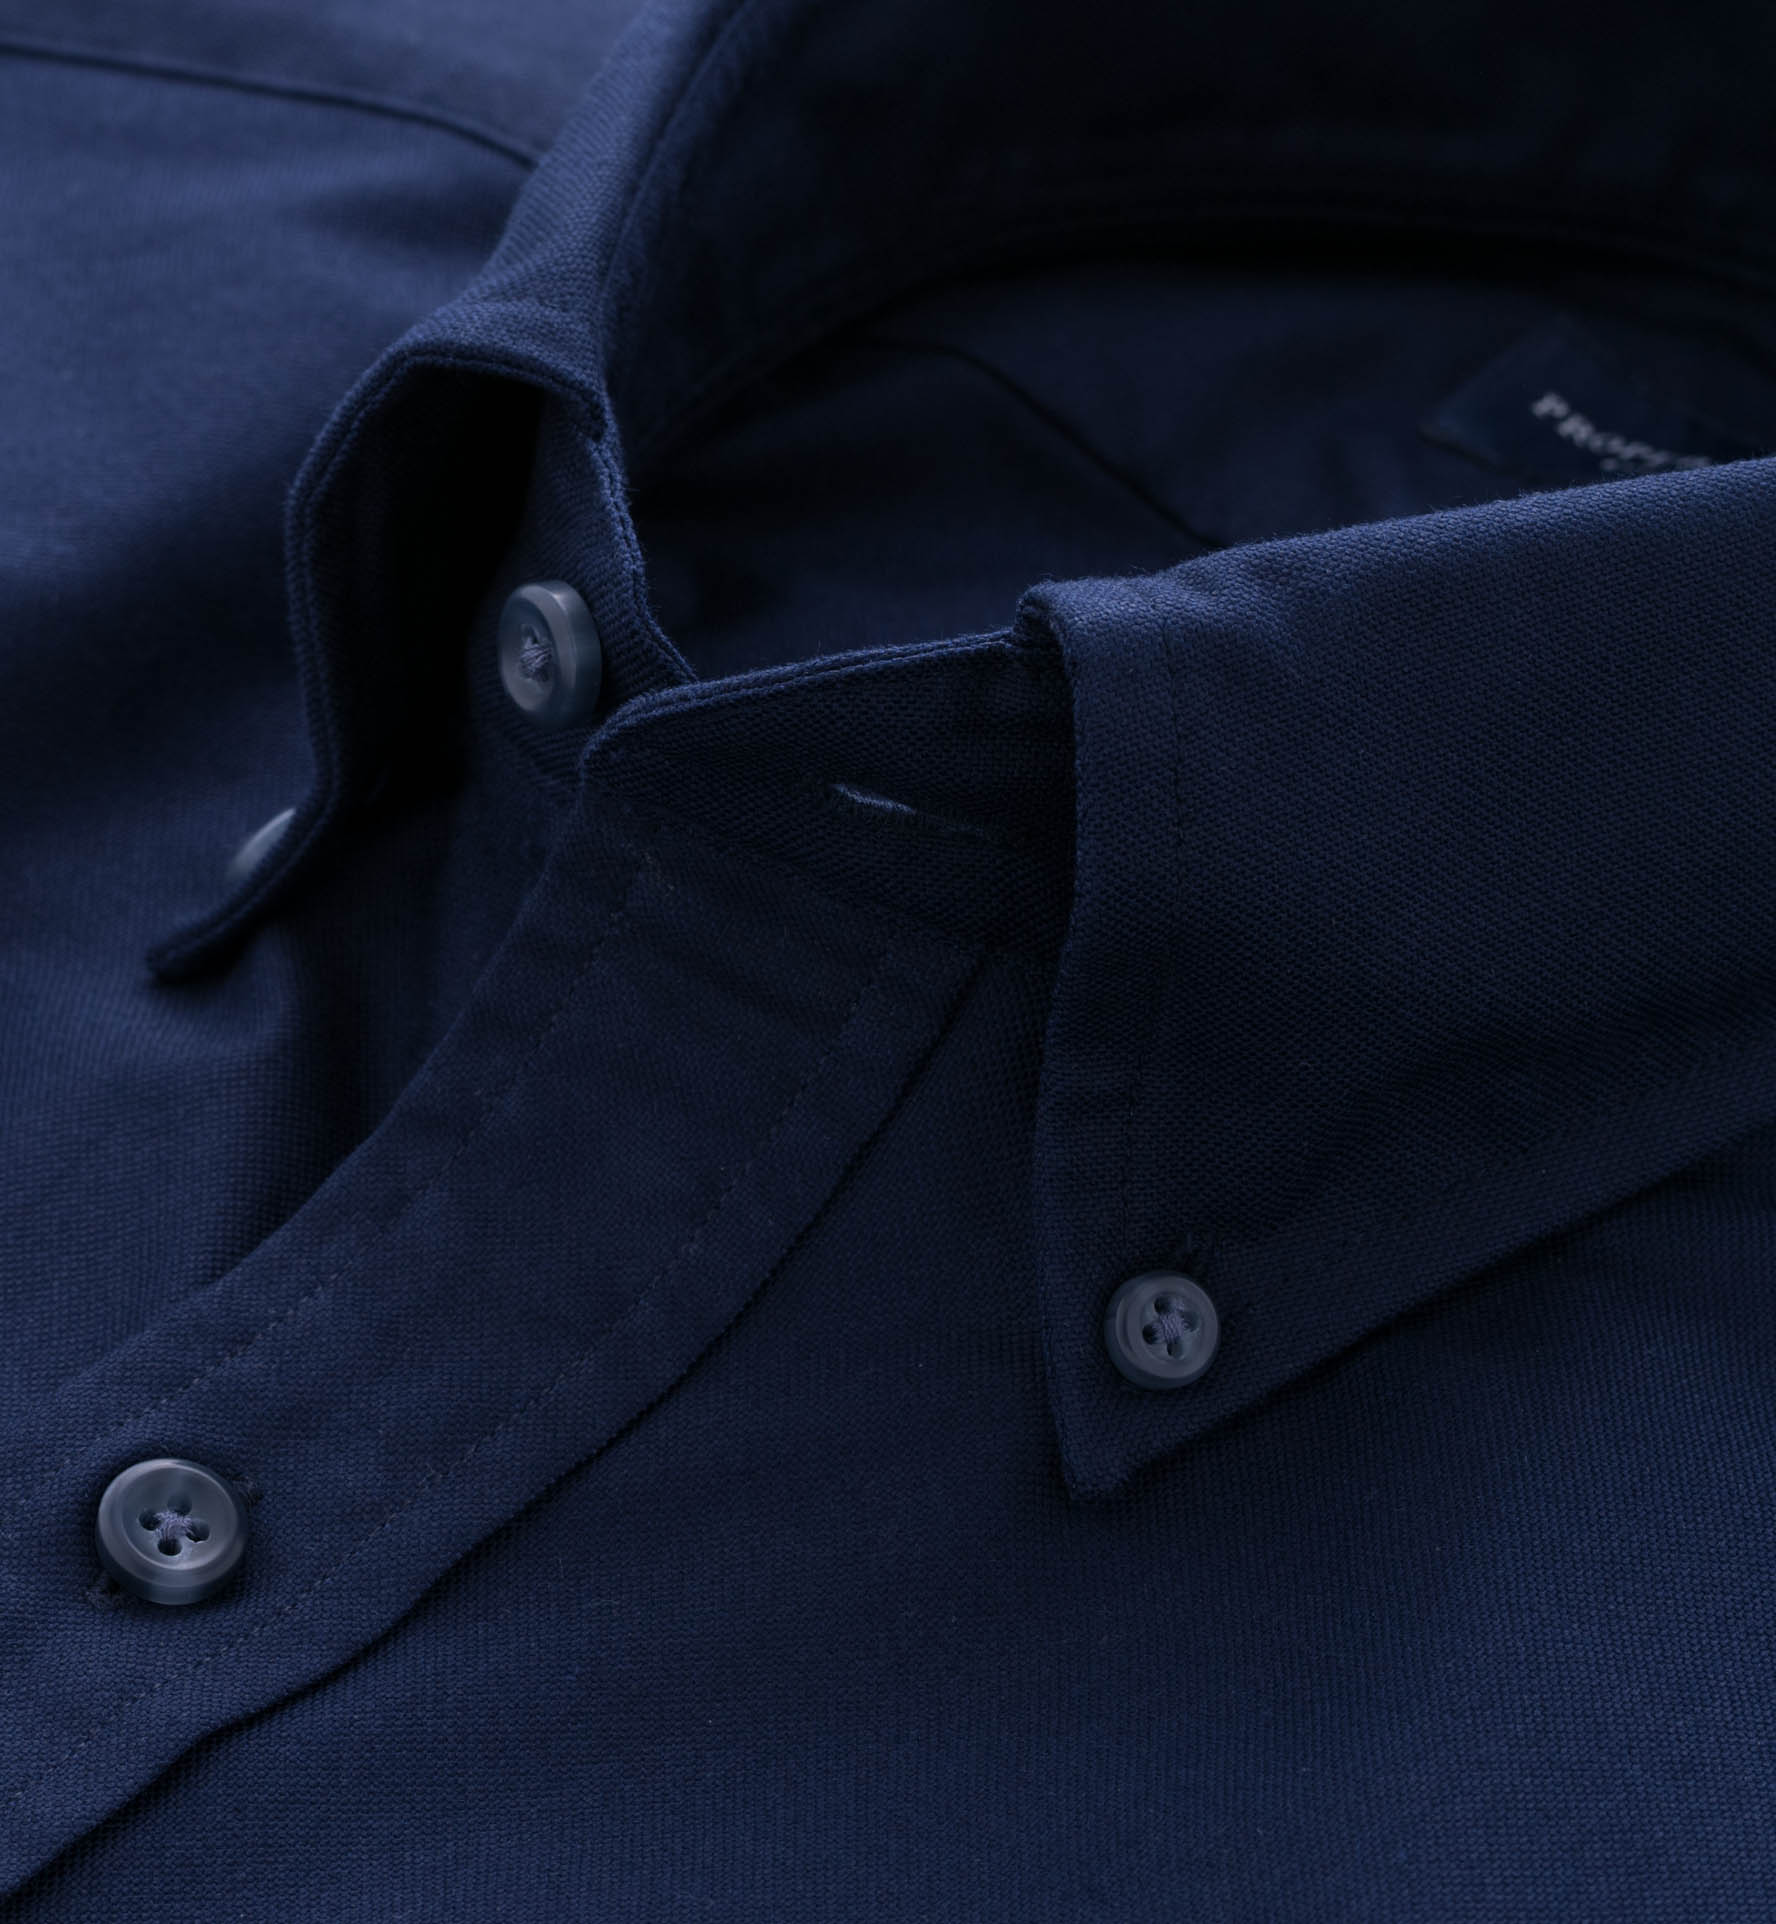 Navy Heavy Oxford Short Sleeve Shirtby Proper Cloth